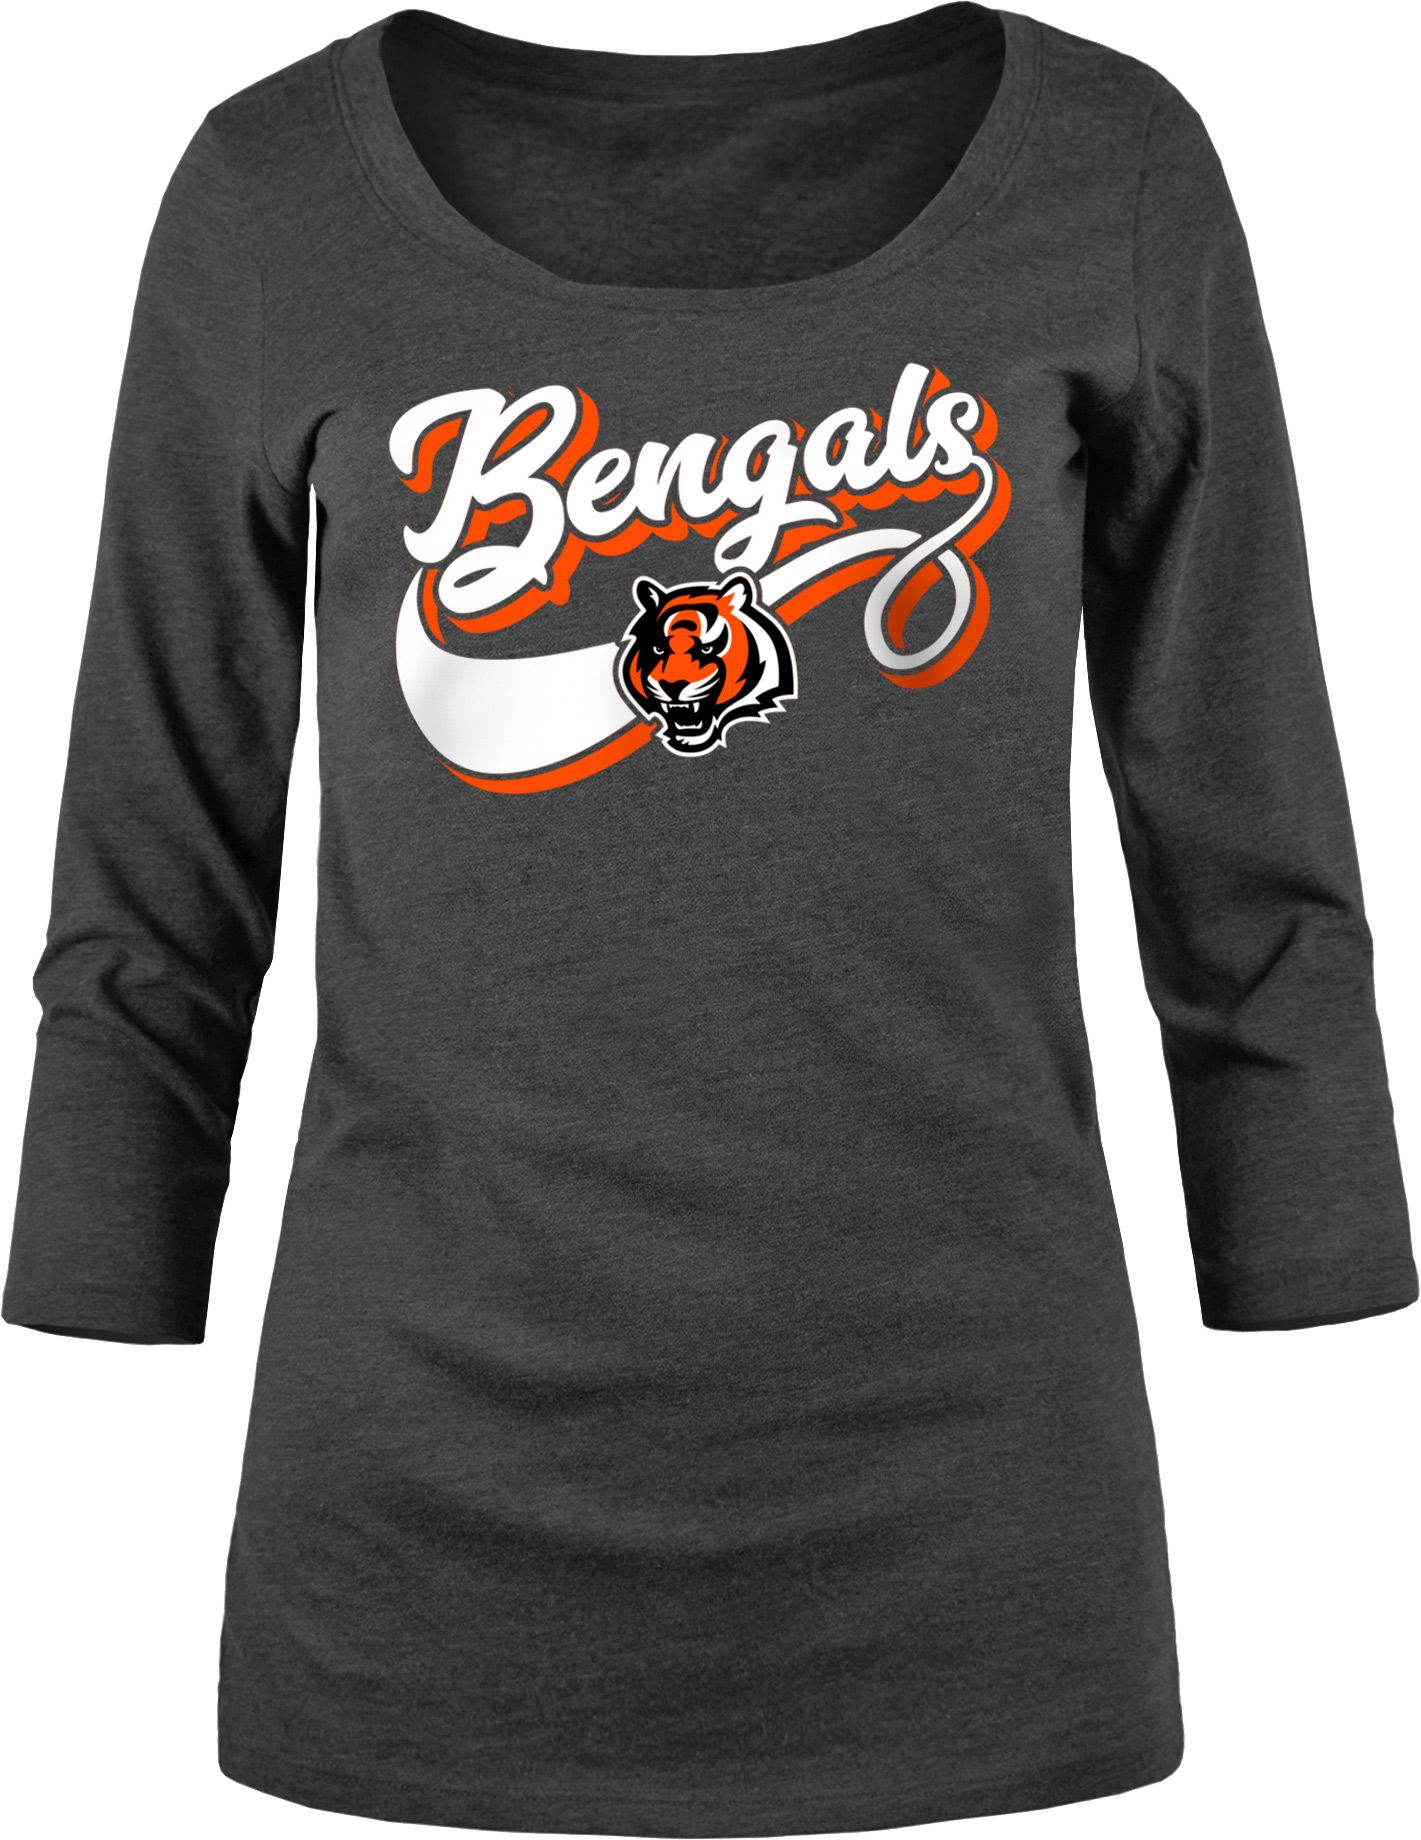 Apparel Women's Cincinnati Bengals Graphic Black Long Sleeve T-Shirt